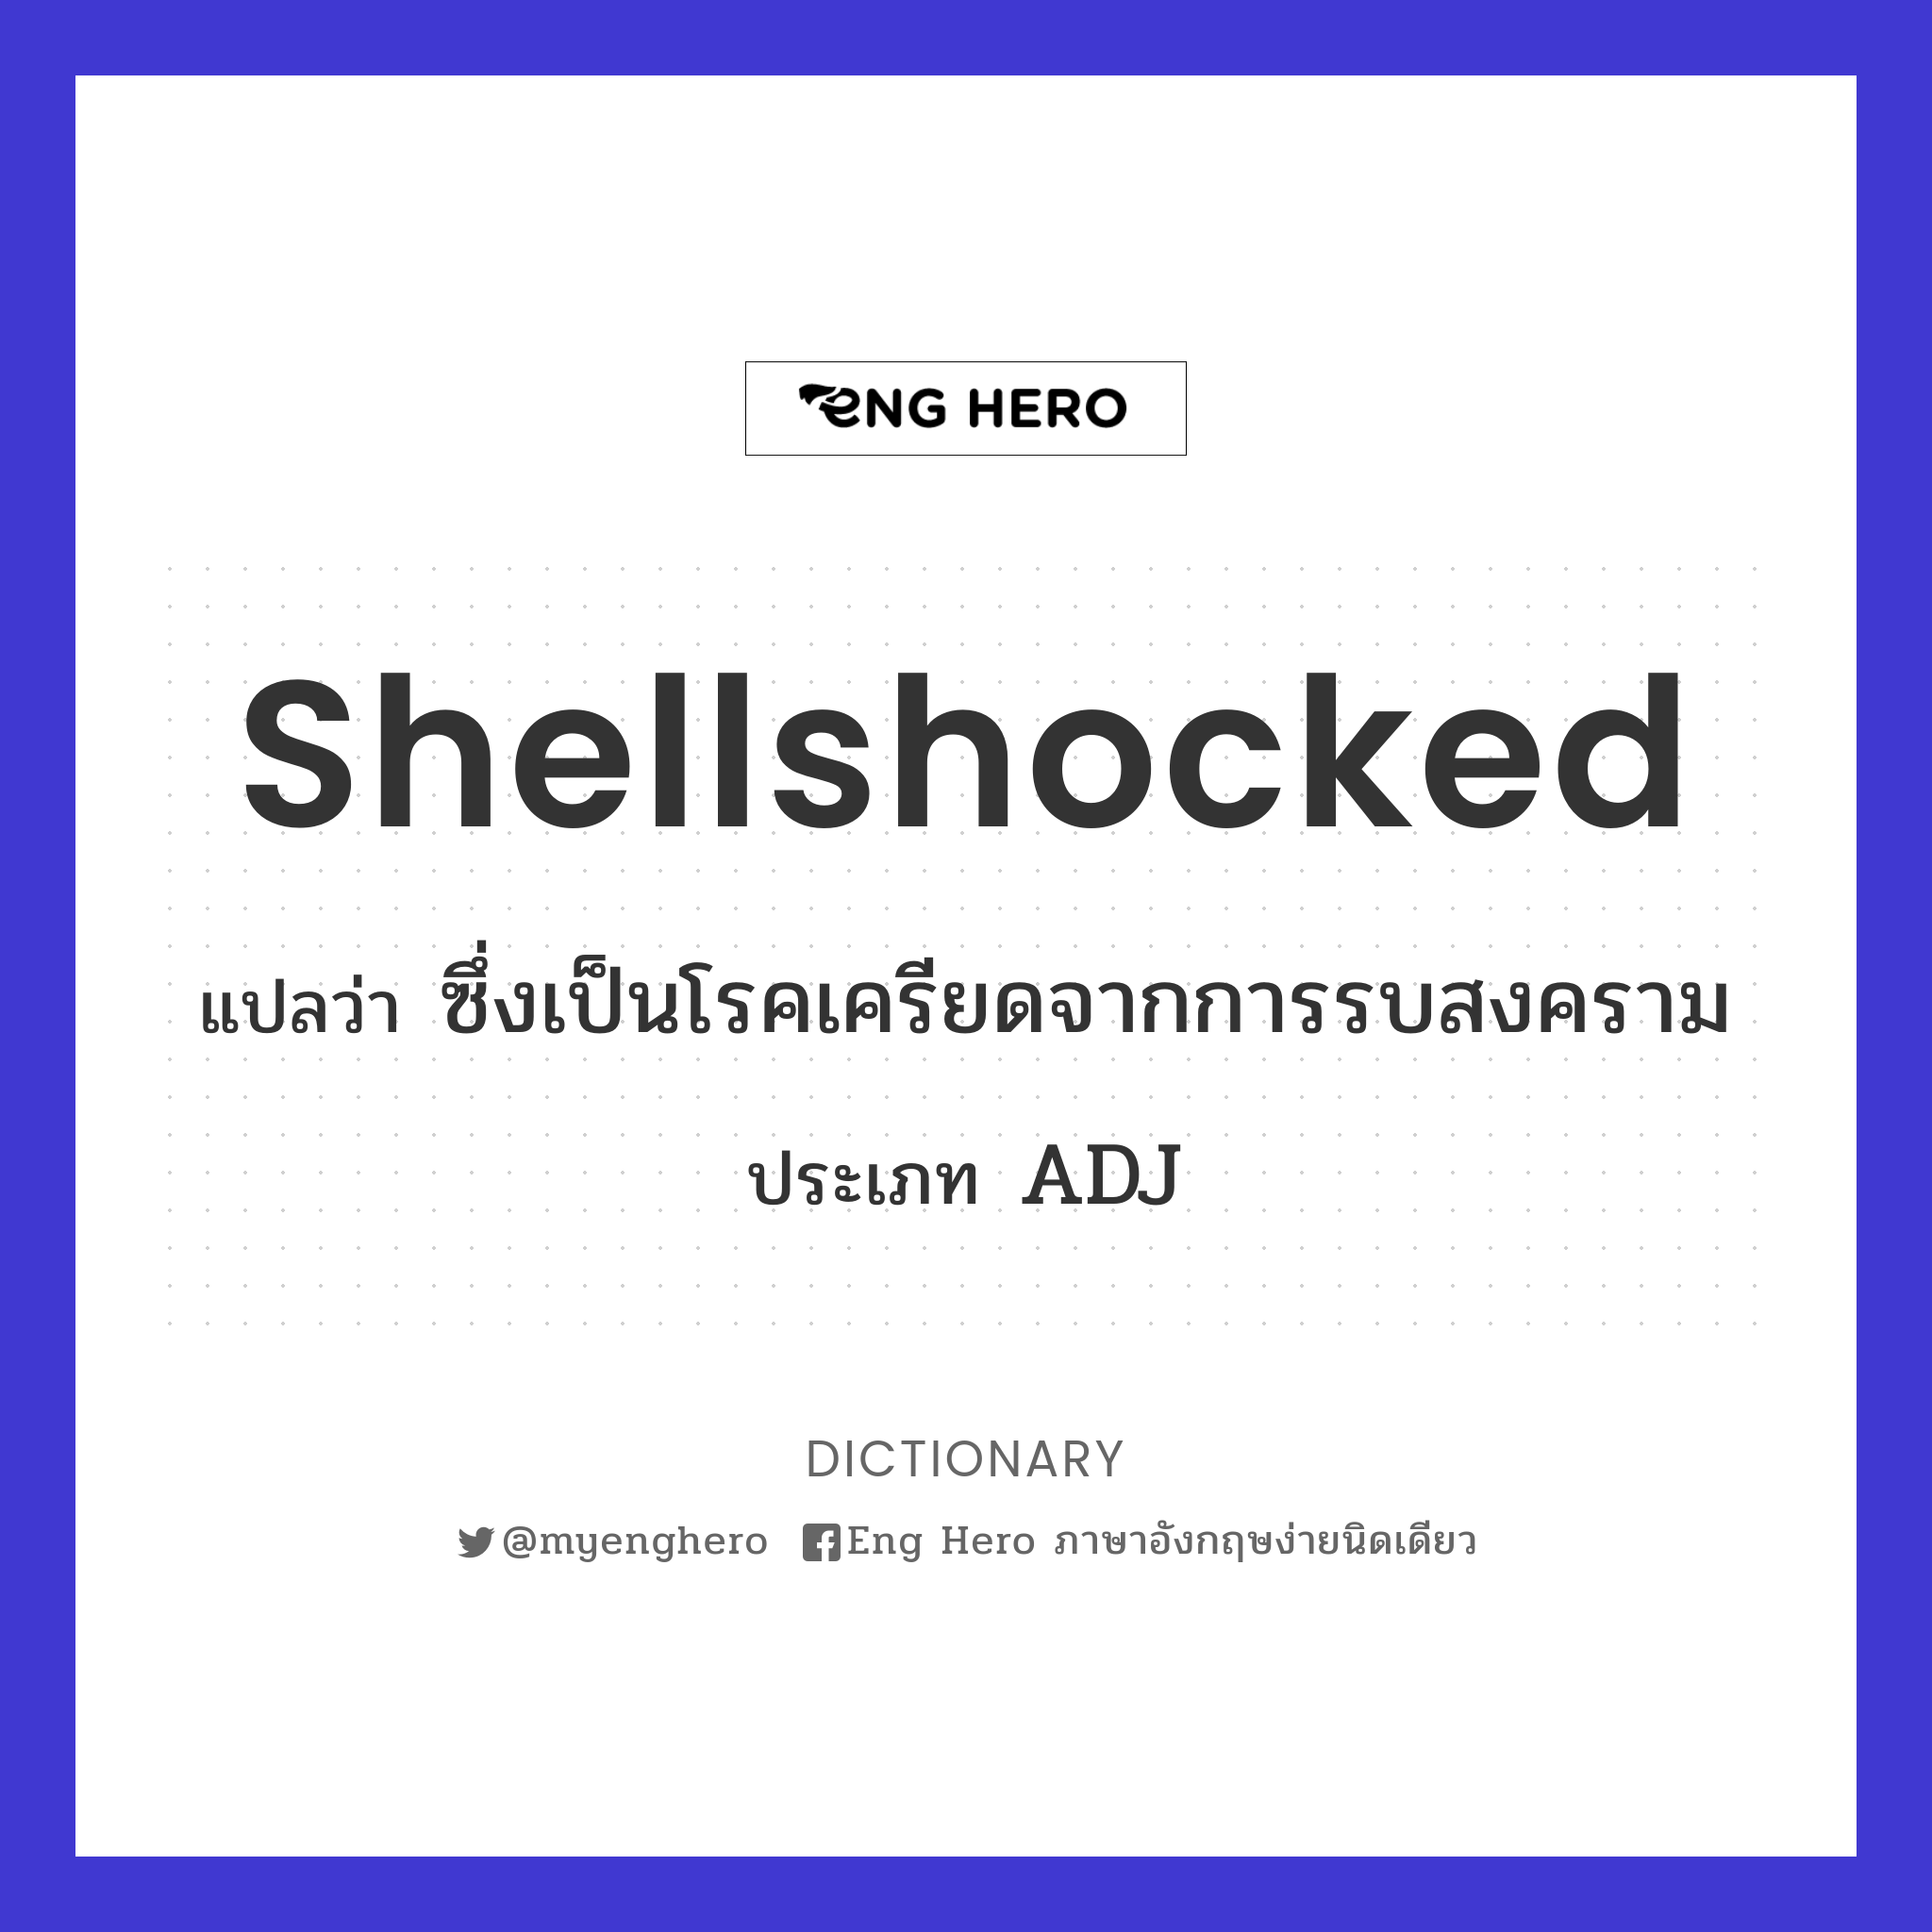 shellshocked